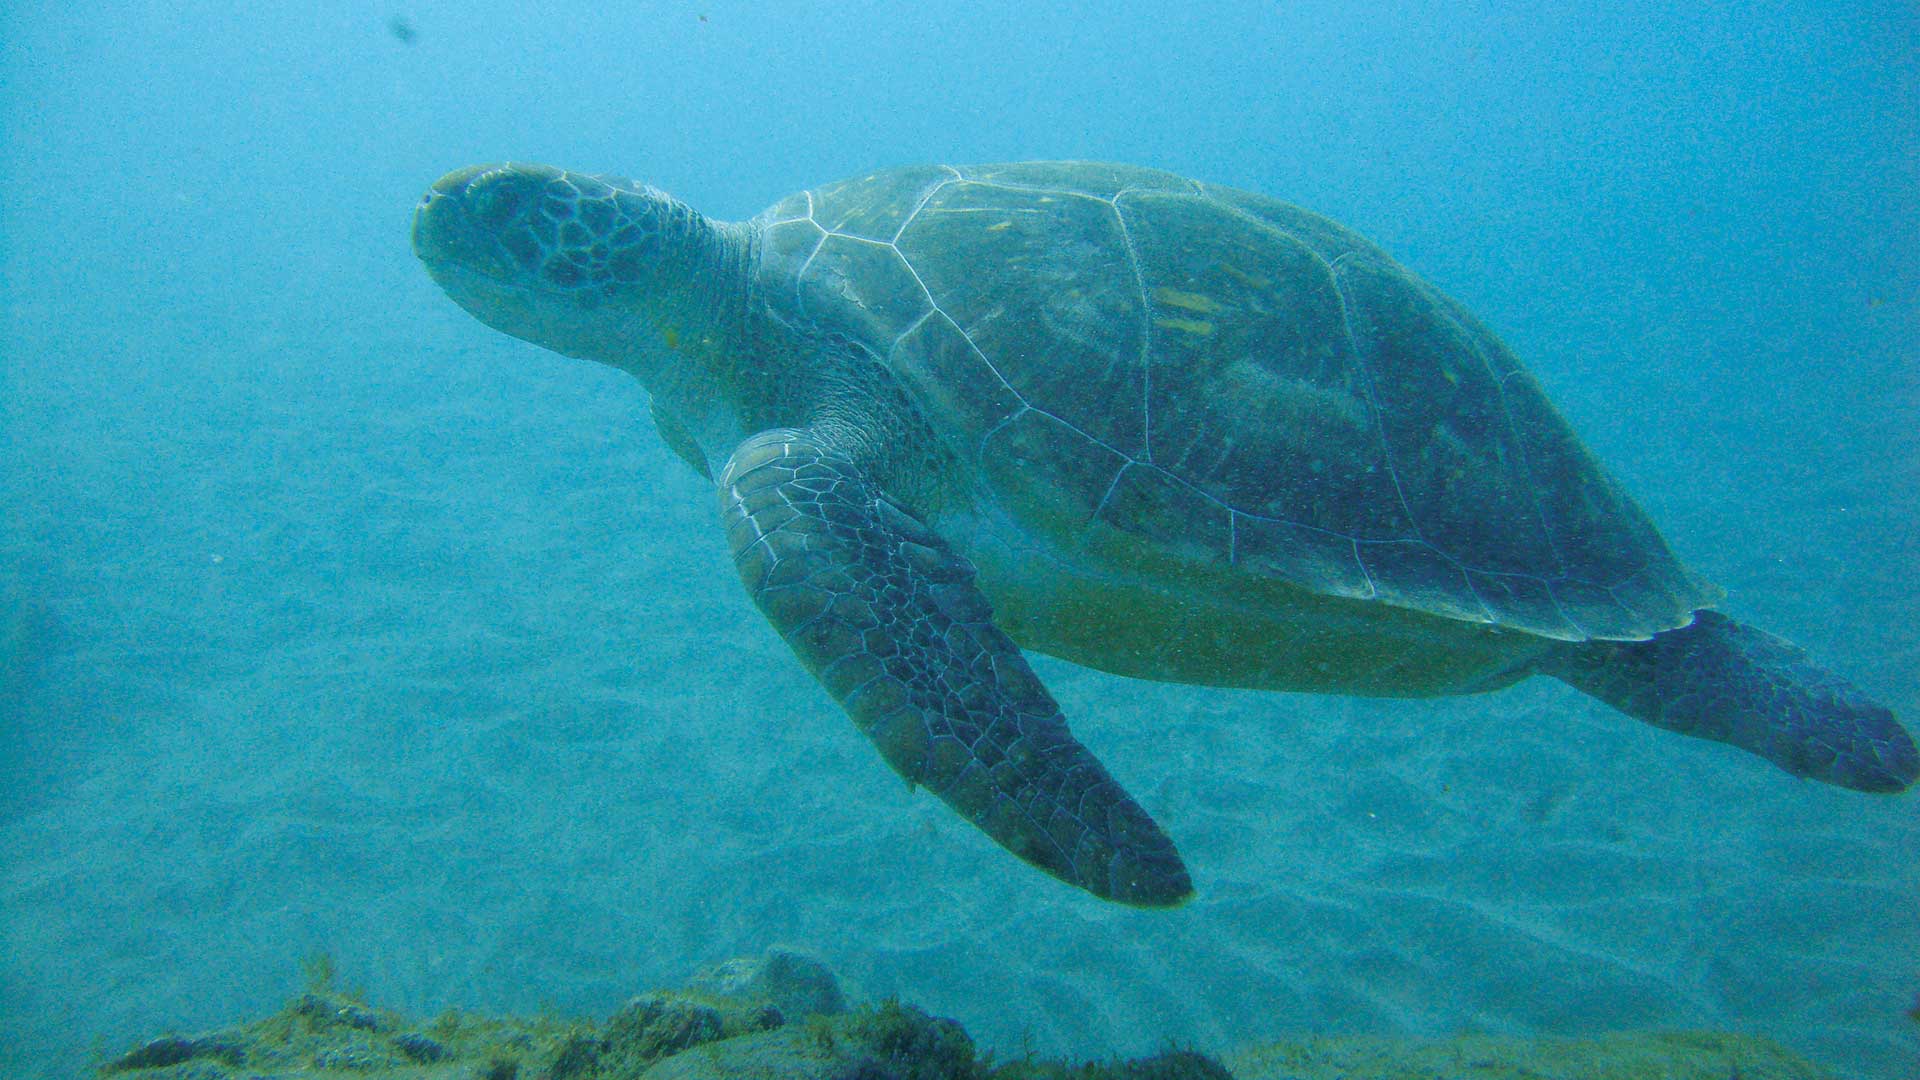 An adult Leatherback turtle swimming underwater in Playa Grande, Costa Rica